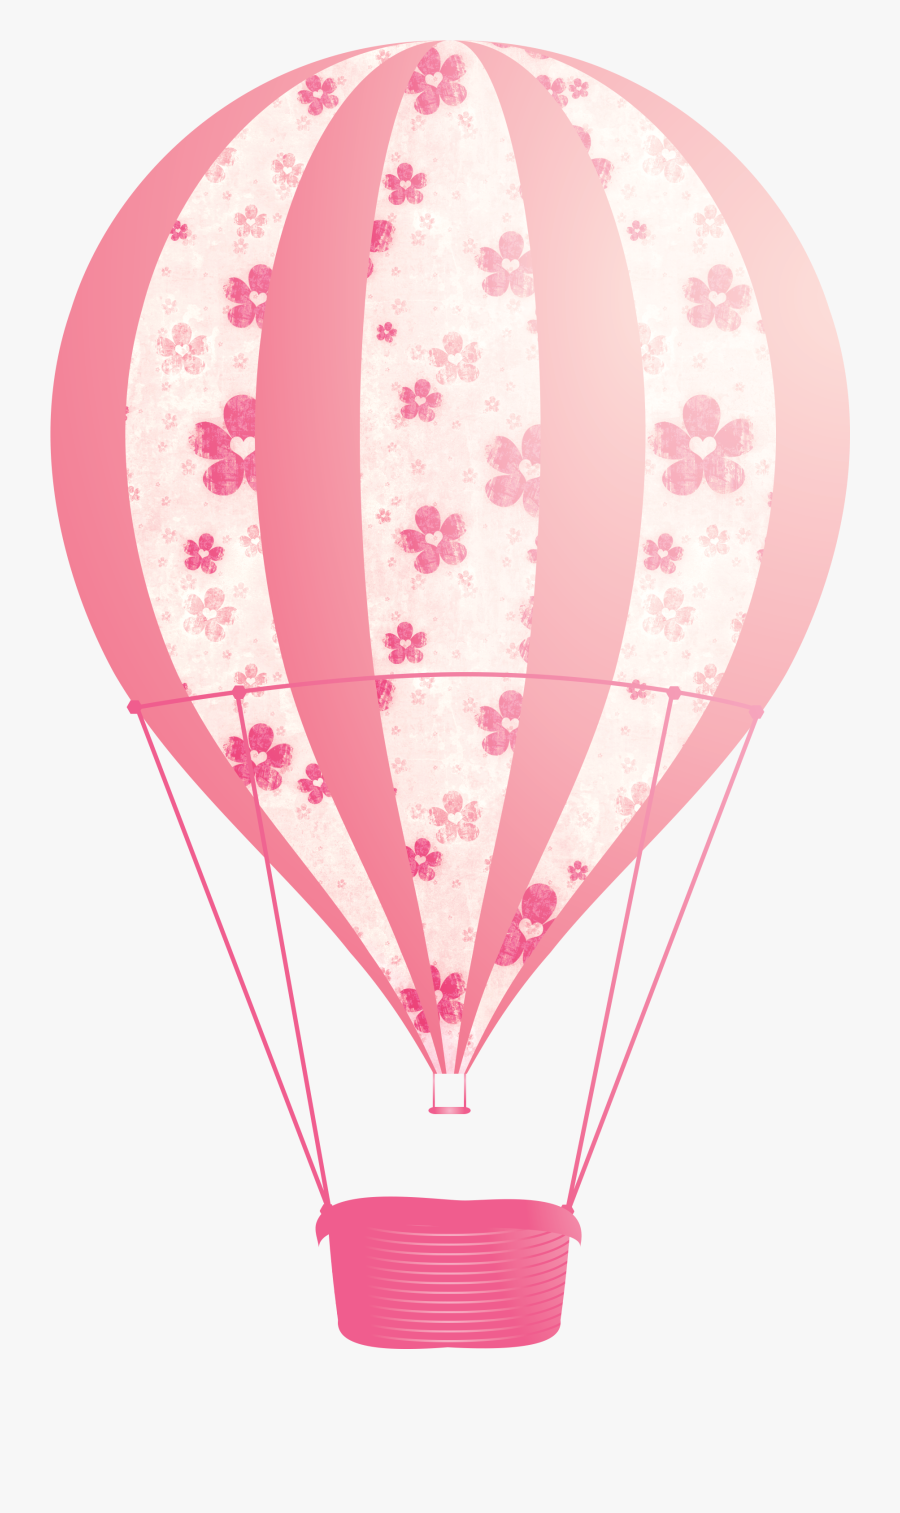 Pink Hot Air Balloon Clipart - Hot Air Balloons Clipart, Transparent Clipart